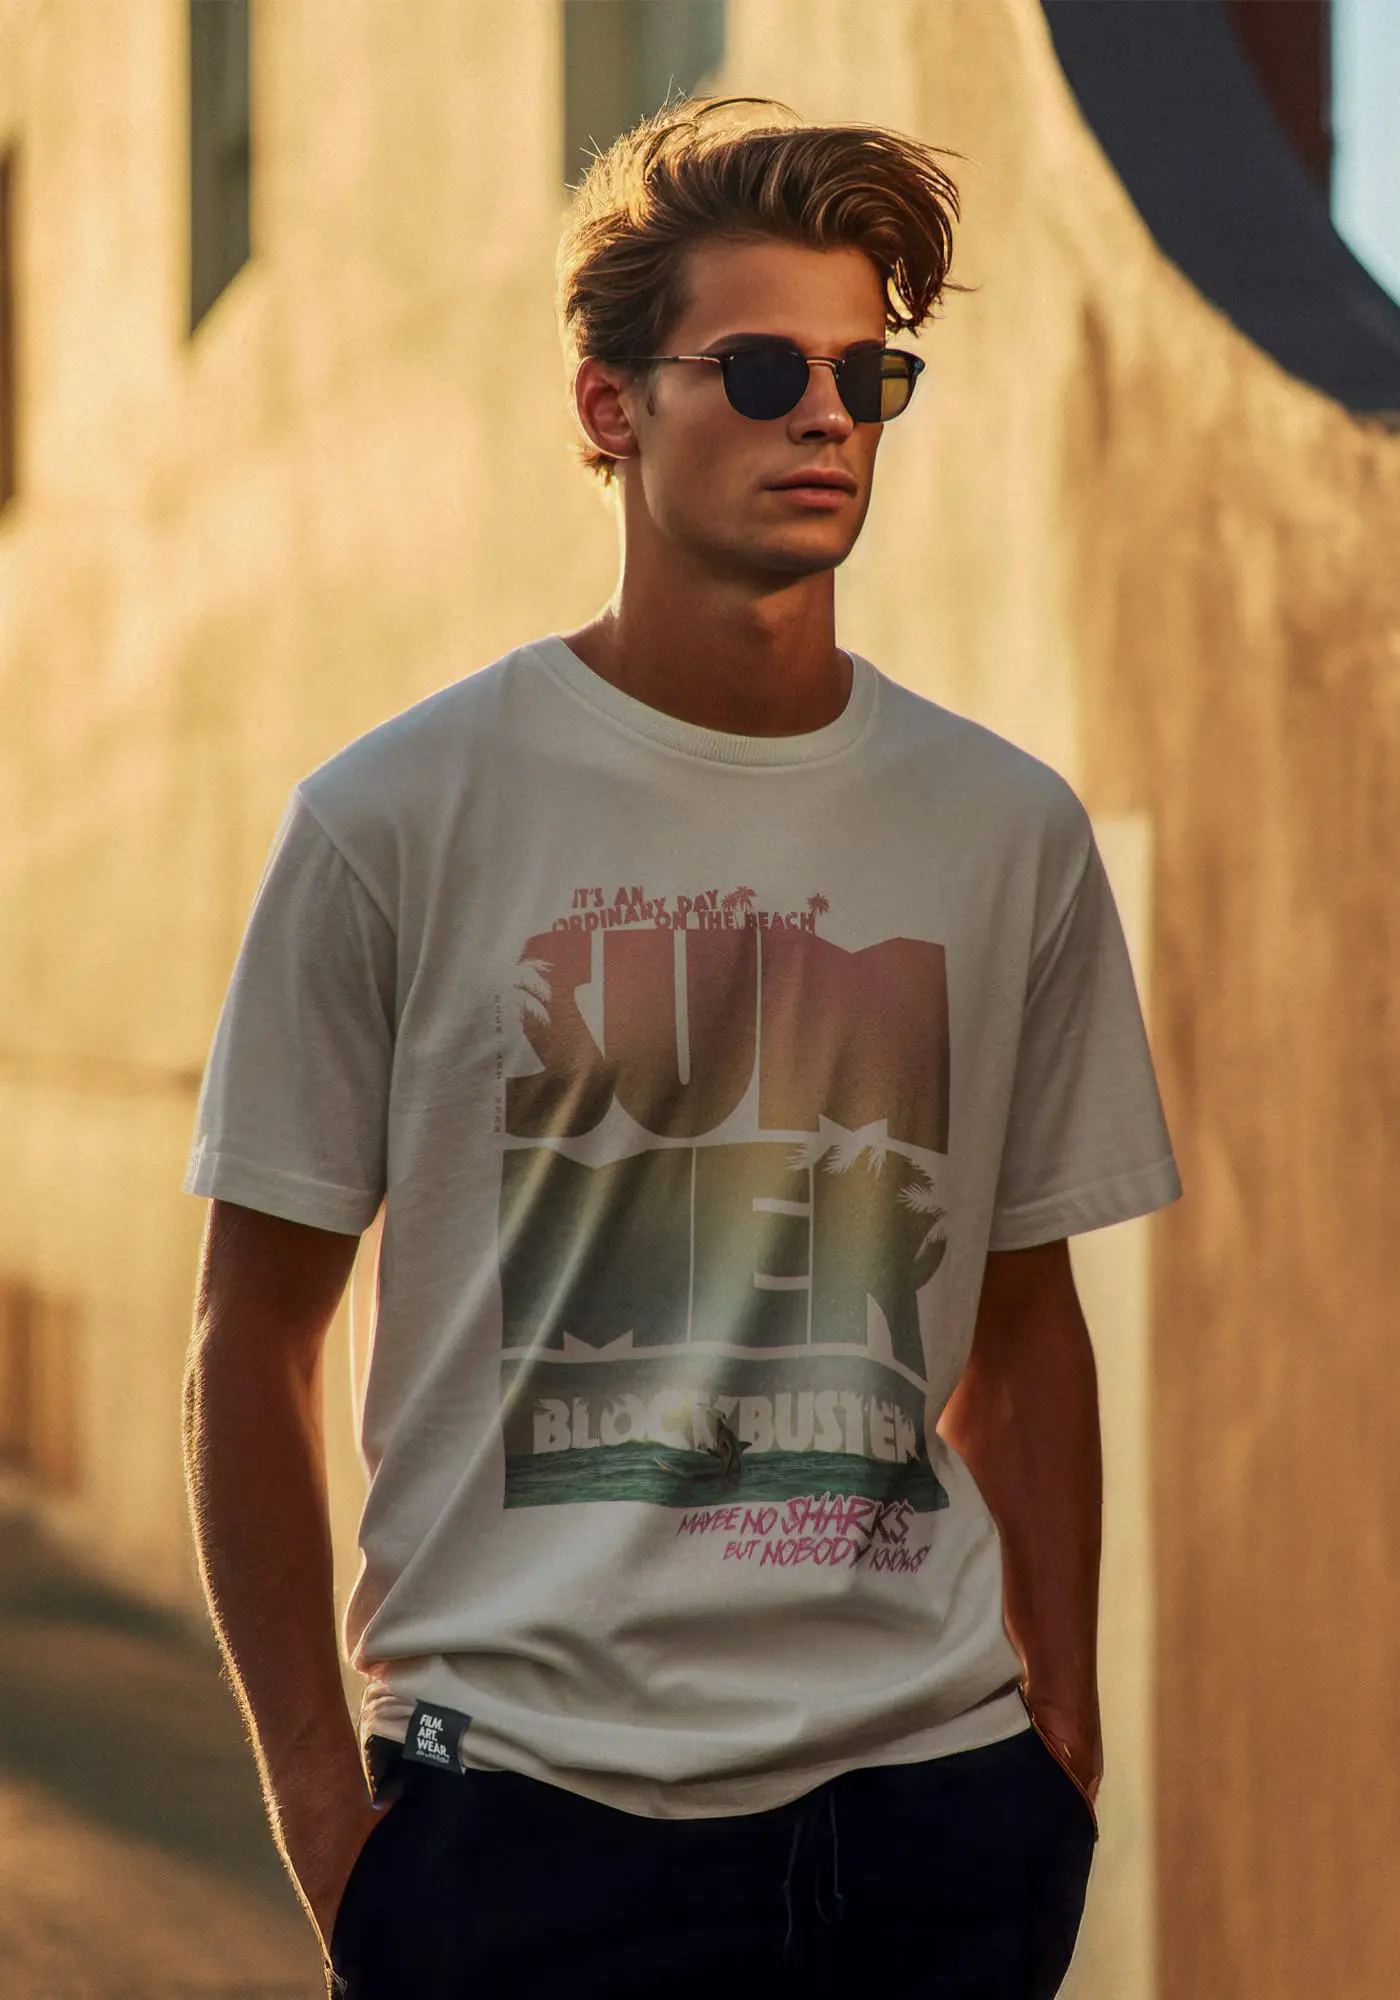 Jordan trägt das Summerblockbuster film fanshirts T-Shirt in natural raw Farbe